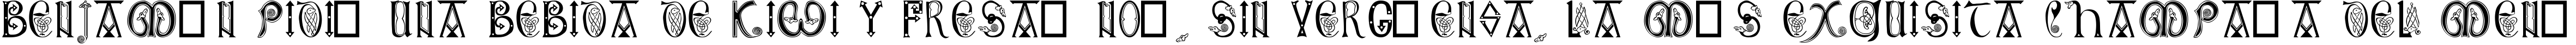 Пример написания шрифтом Anglo-Saxon, 8th c. текста на испанском